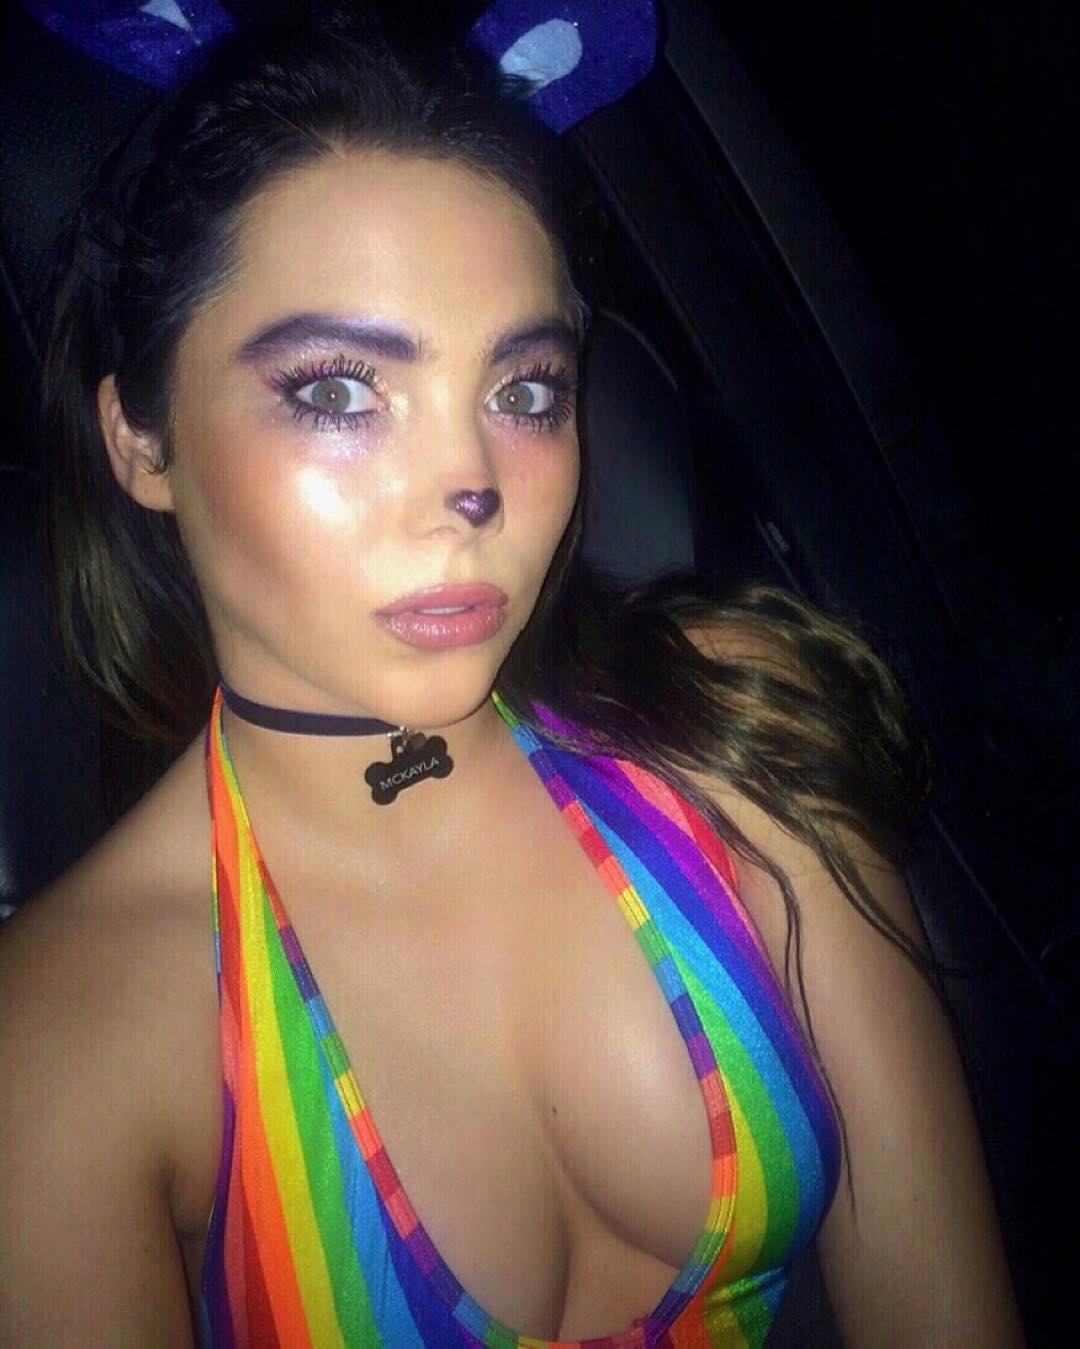 deep cleavage pic of McKayla Maroney in rainbow costume